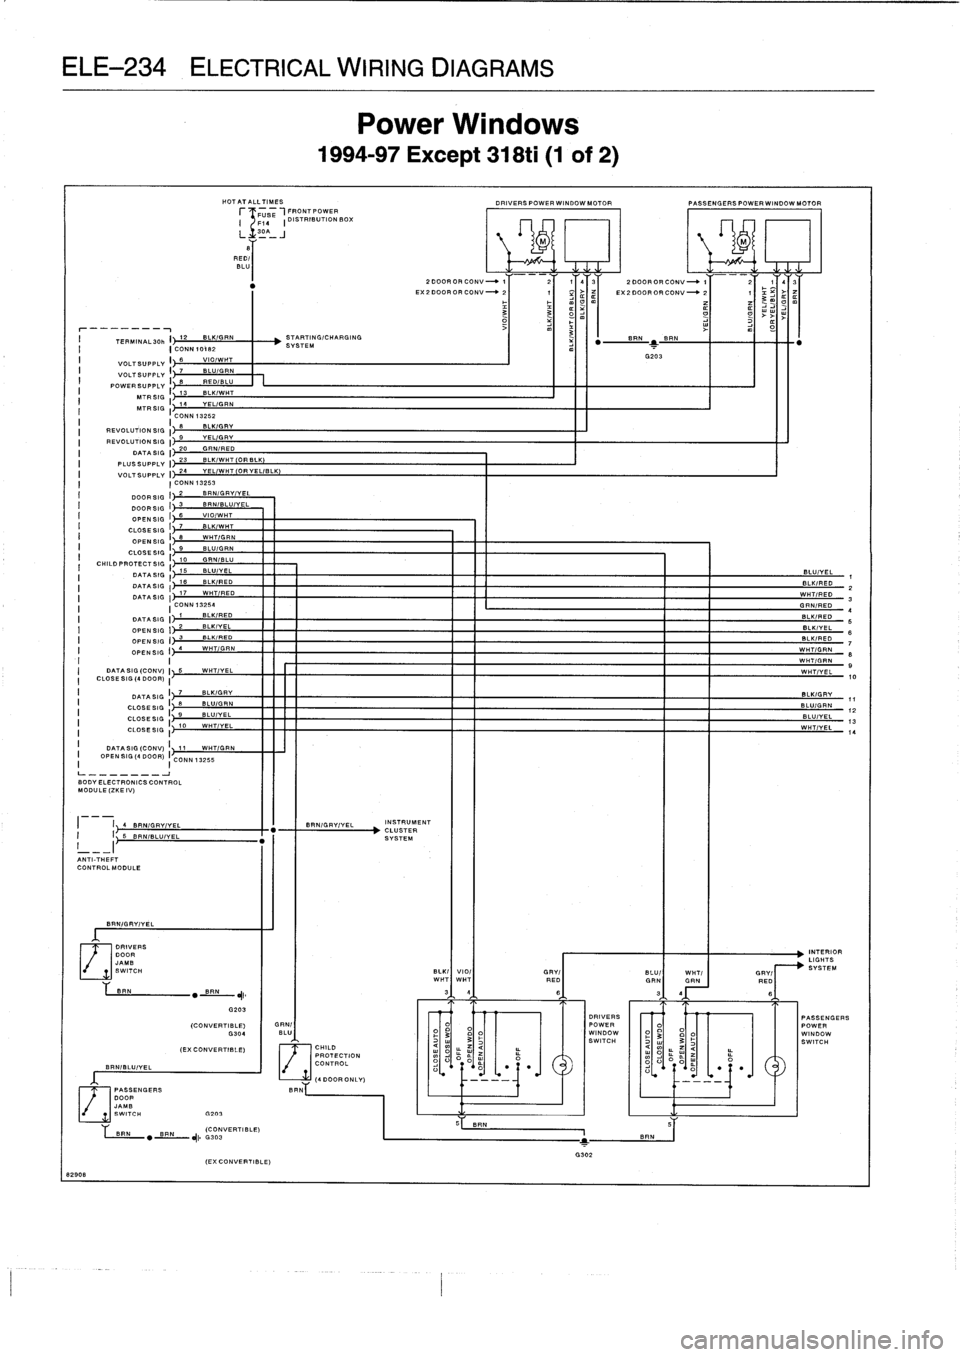 BMW 318i 1997 E36 Workshop Manual 
ELE-234
ELECTRICAL
WIRING
DIAGRAMS

82908

L
1
3
--J
8
RED/
BLU

I

	

TERMINAL30H
I
12

	

BLKIGRN

	

STARTING/CHARGING
I

	

ICONN10182

	

SYSTEM

BLK/GRV
REVOLUTIONSIG
I~
~
9
REVOLUTIONSIG
I)
-
